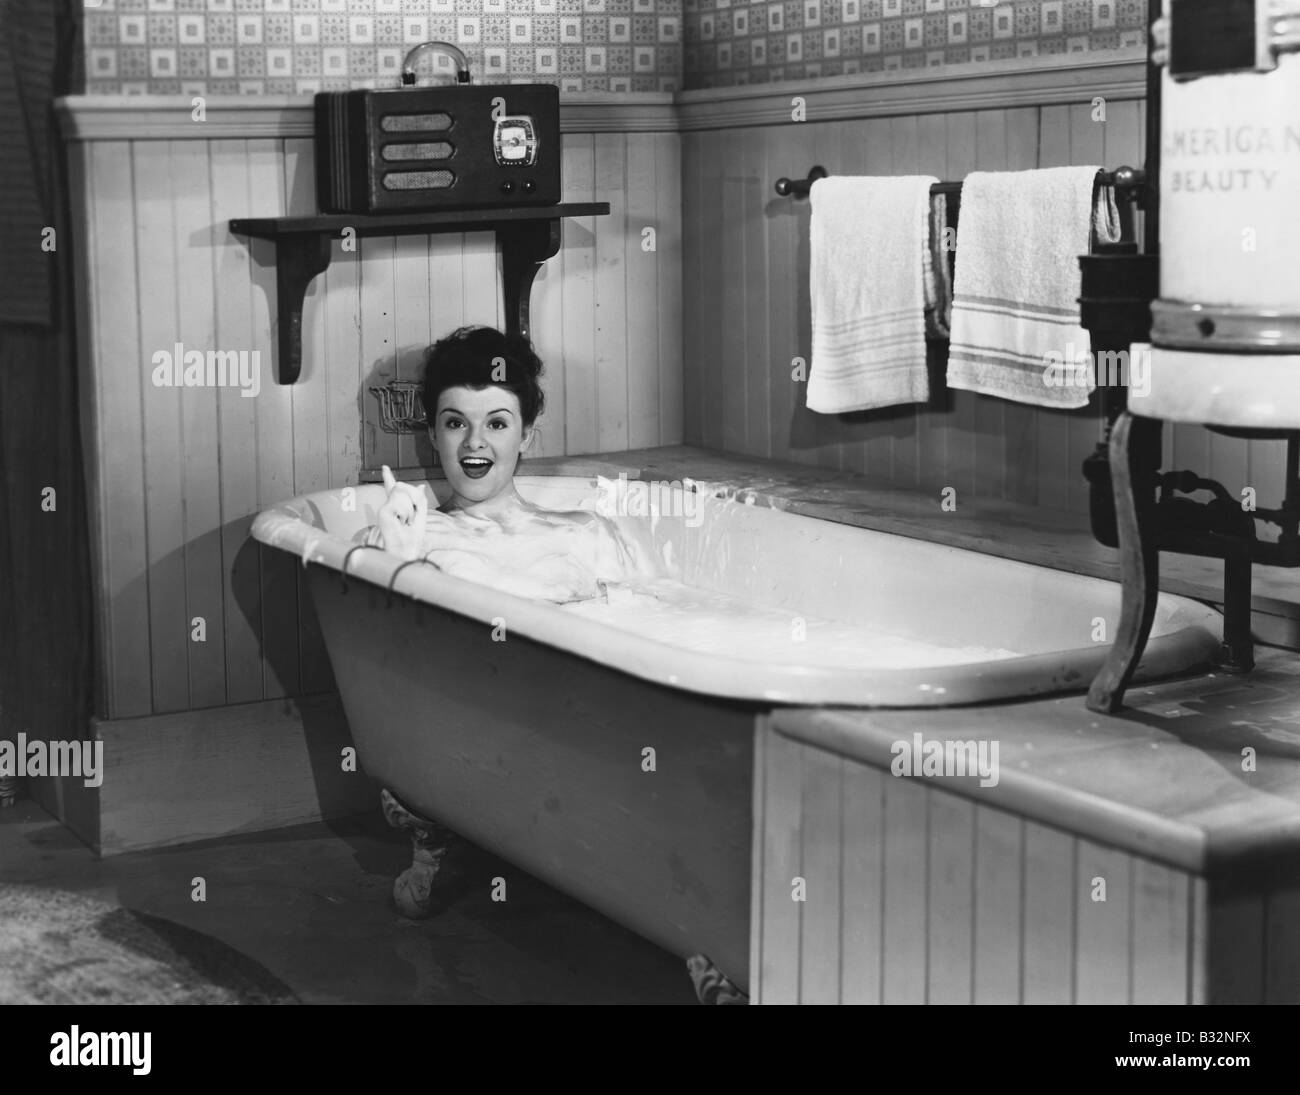 Woman in bathtub Stock Photo